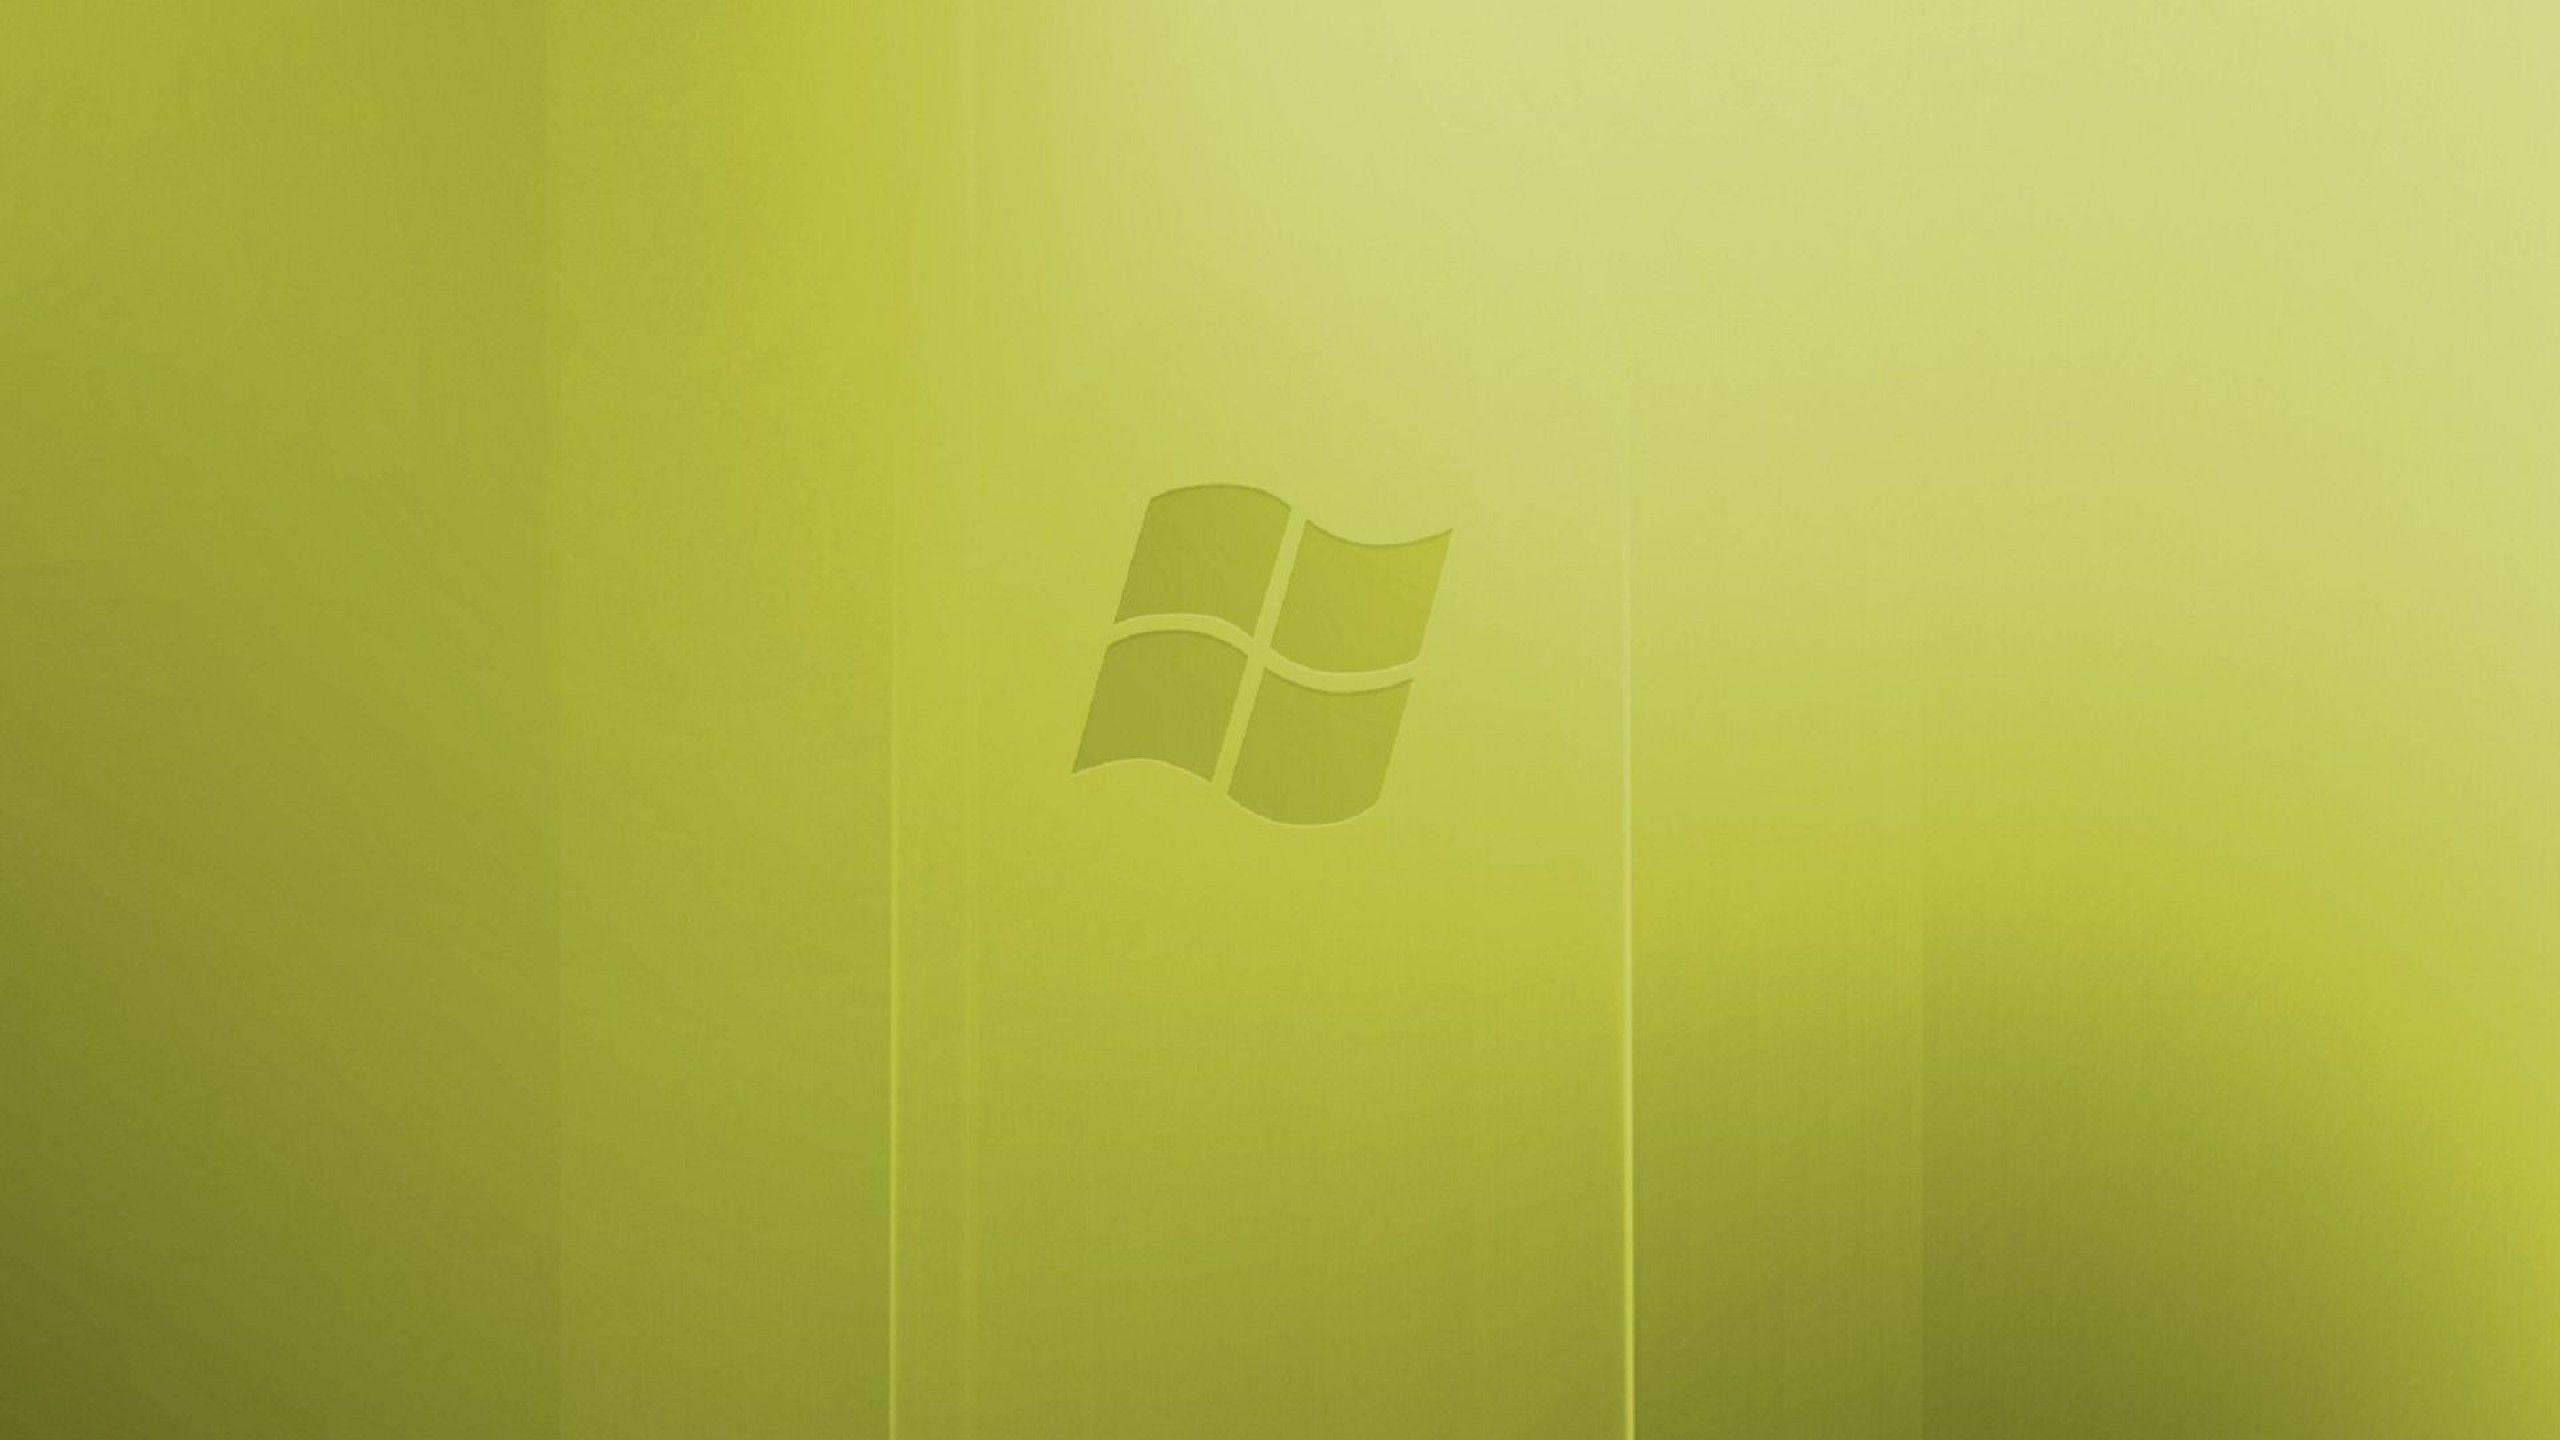 Yellow Windows 11 Wallpaper